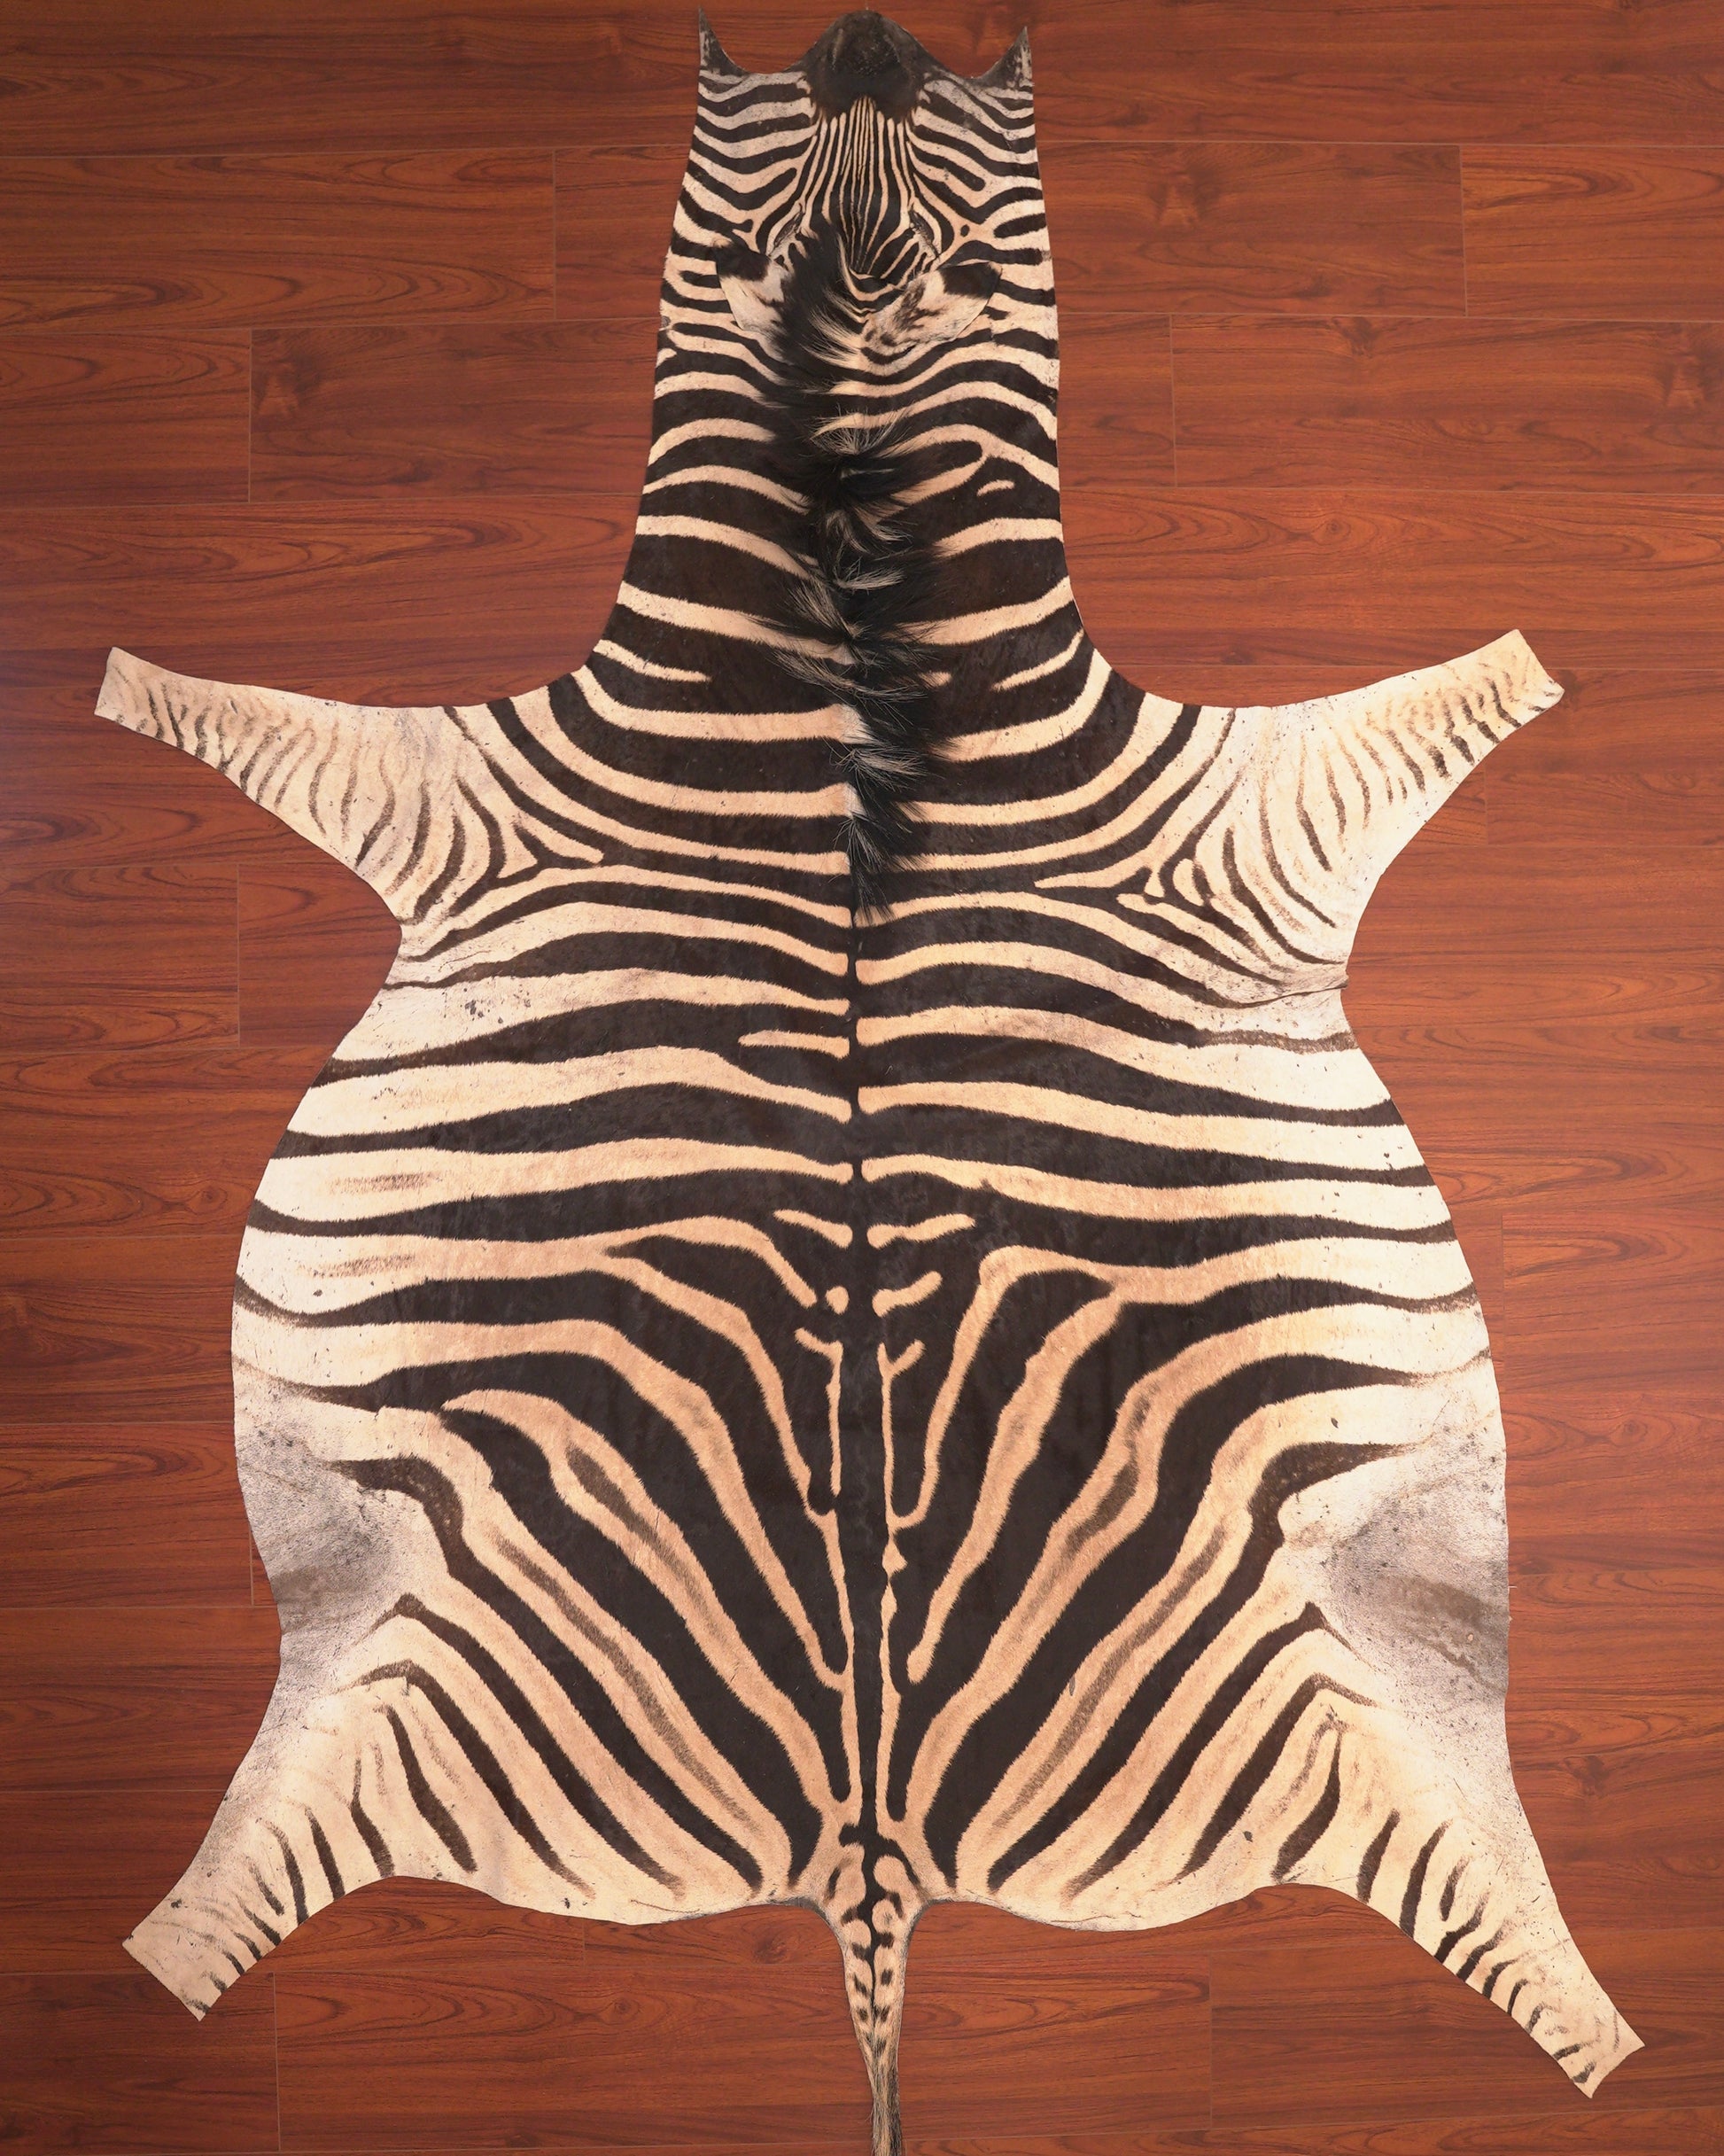 the nguni guy zebra hide rug animal skin mat